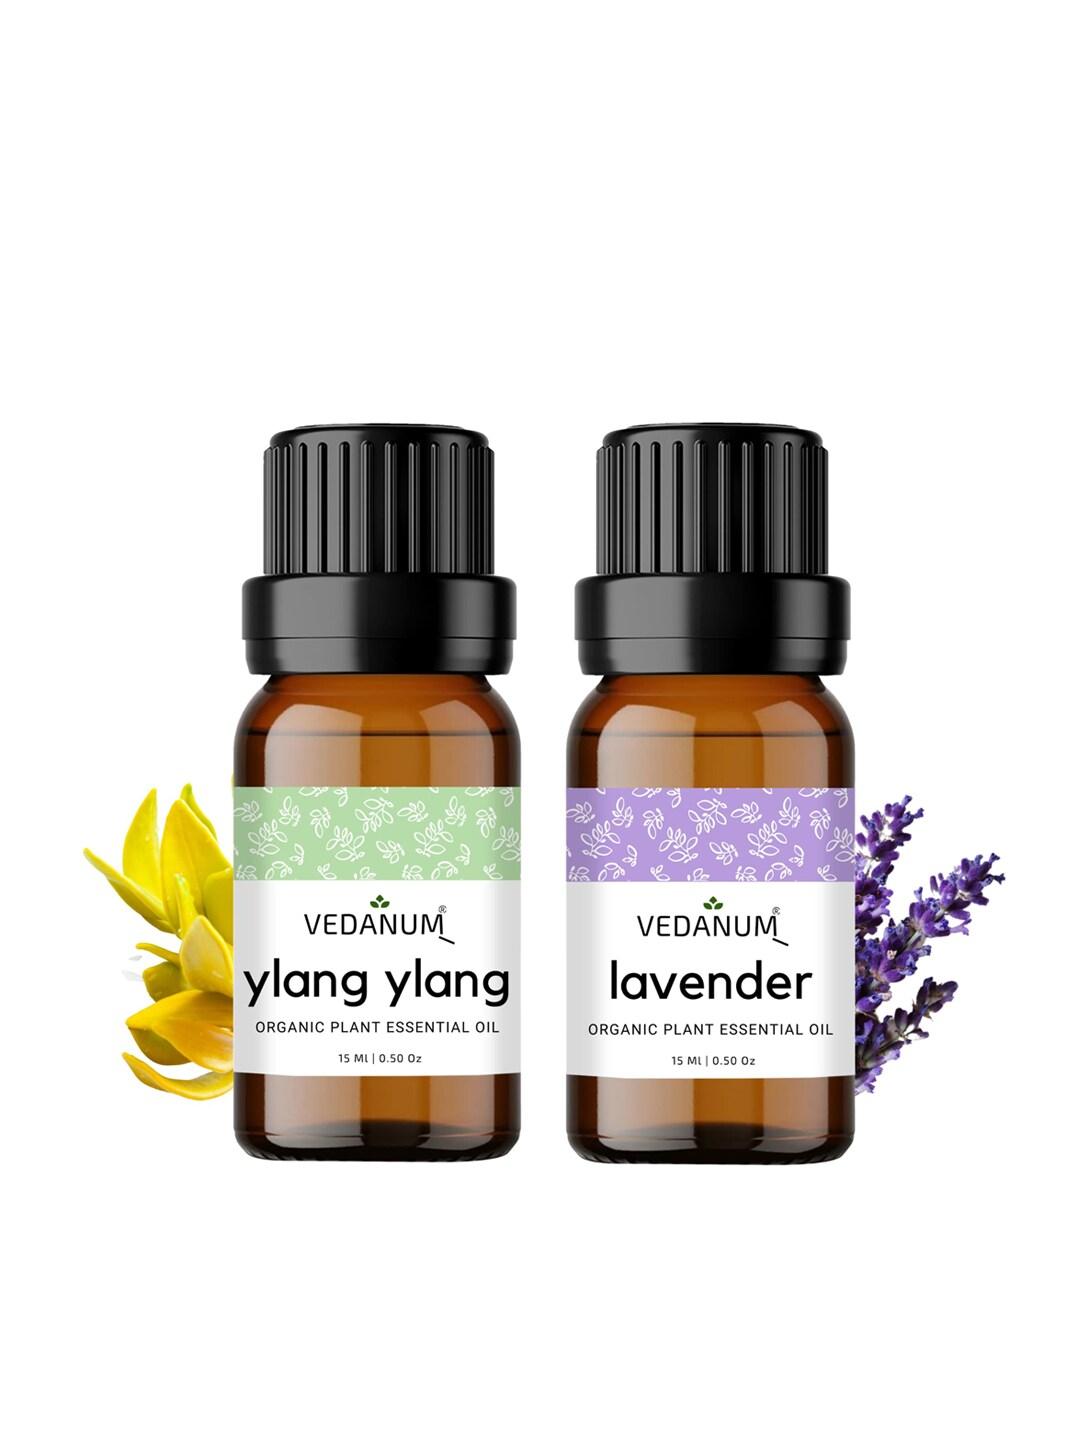 VEDANUM Set of 2 Organic Plant Essential Oils 15ml each - Ylang Ylang & Lavender